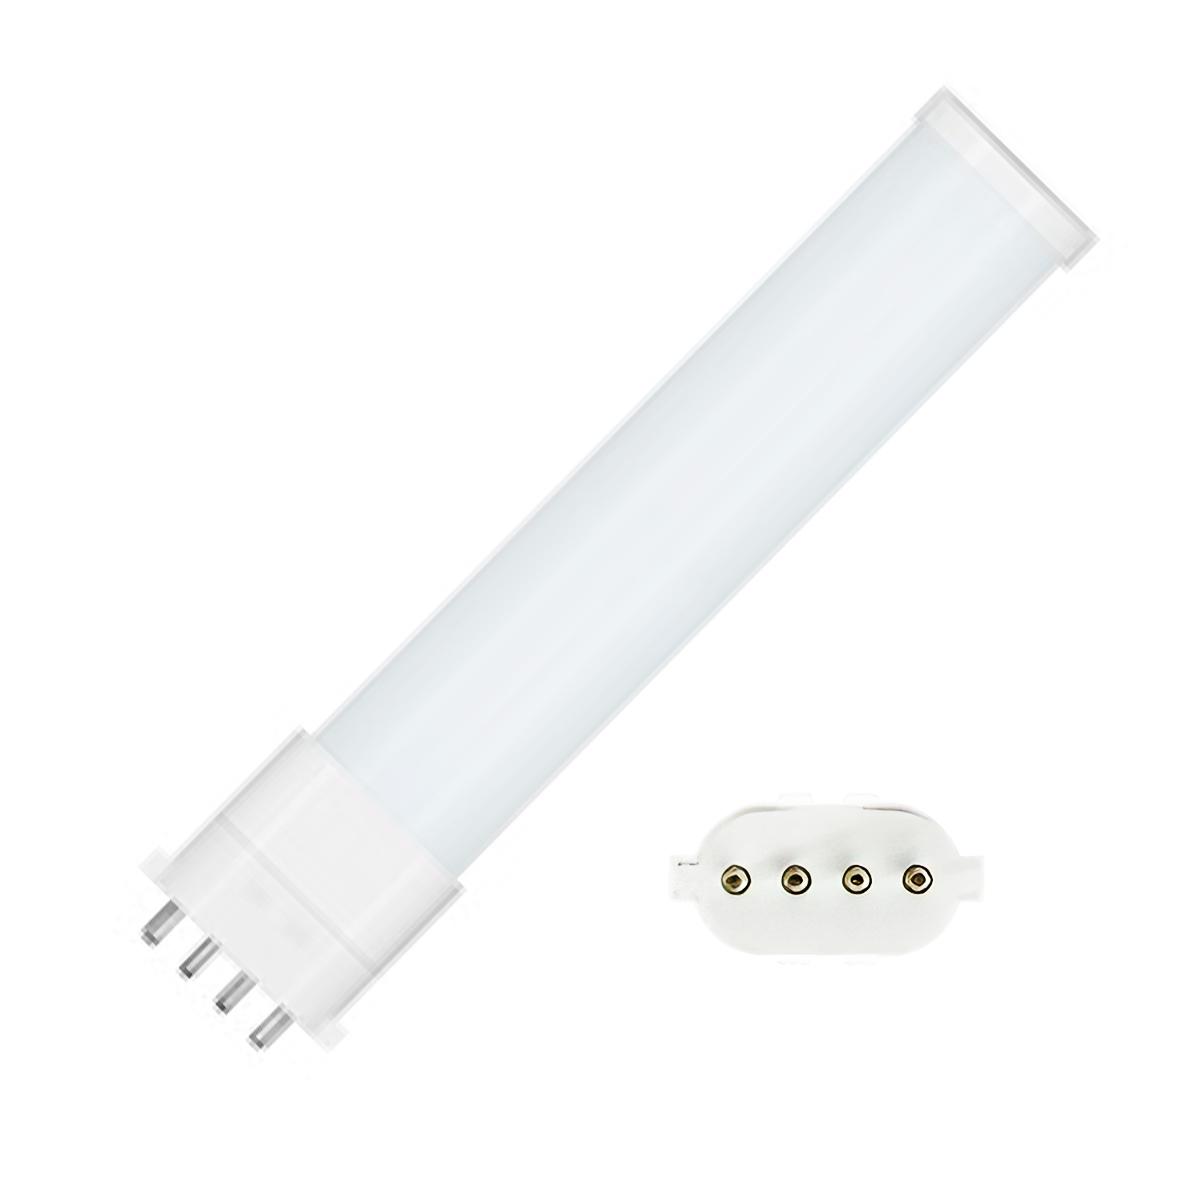 4 Pin PLL LED Bulb, 5.5 Watt 570 Lumens, 3500K, Horizontal, Replaces 13W CFL, 2Gx7 Base, Type B Ballast Bypass